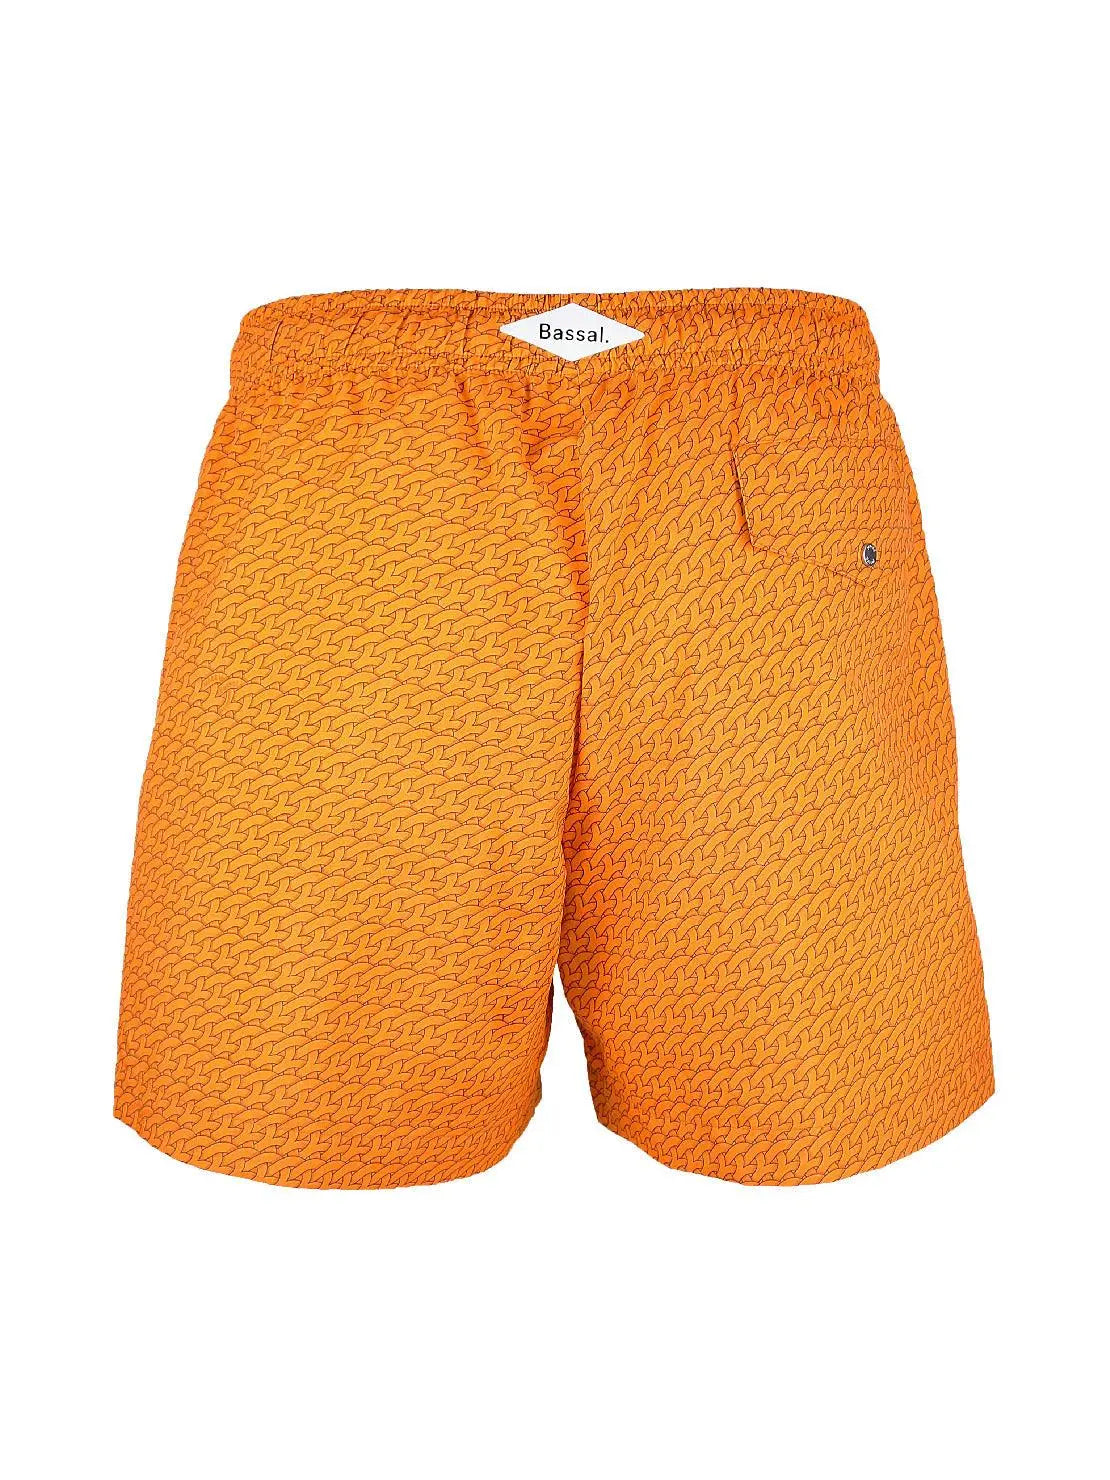 Bassal Orange Pattern Swimwear Bassal.